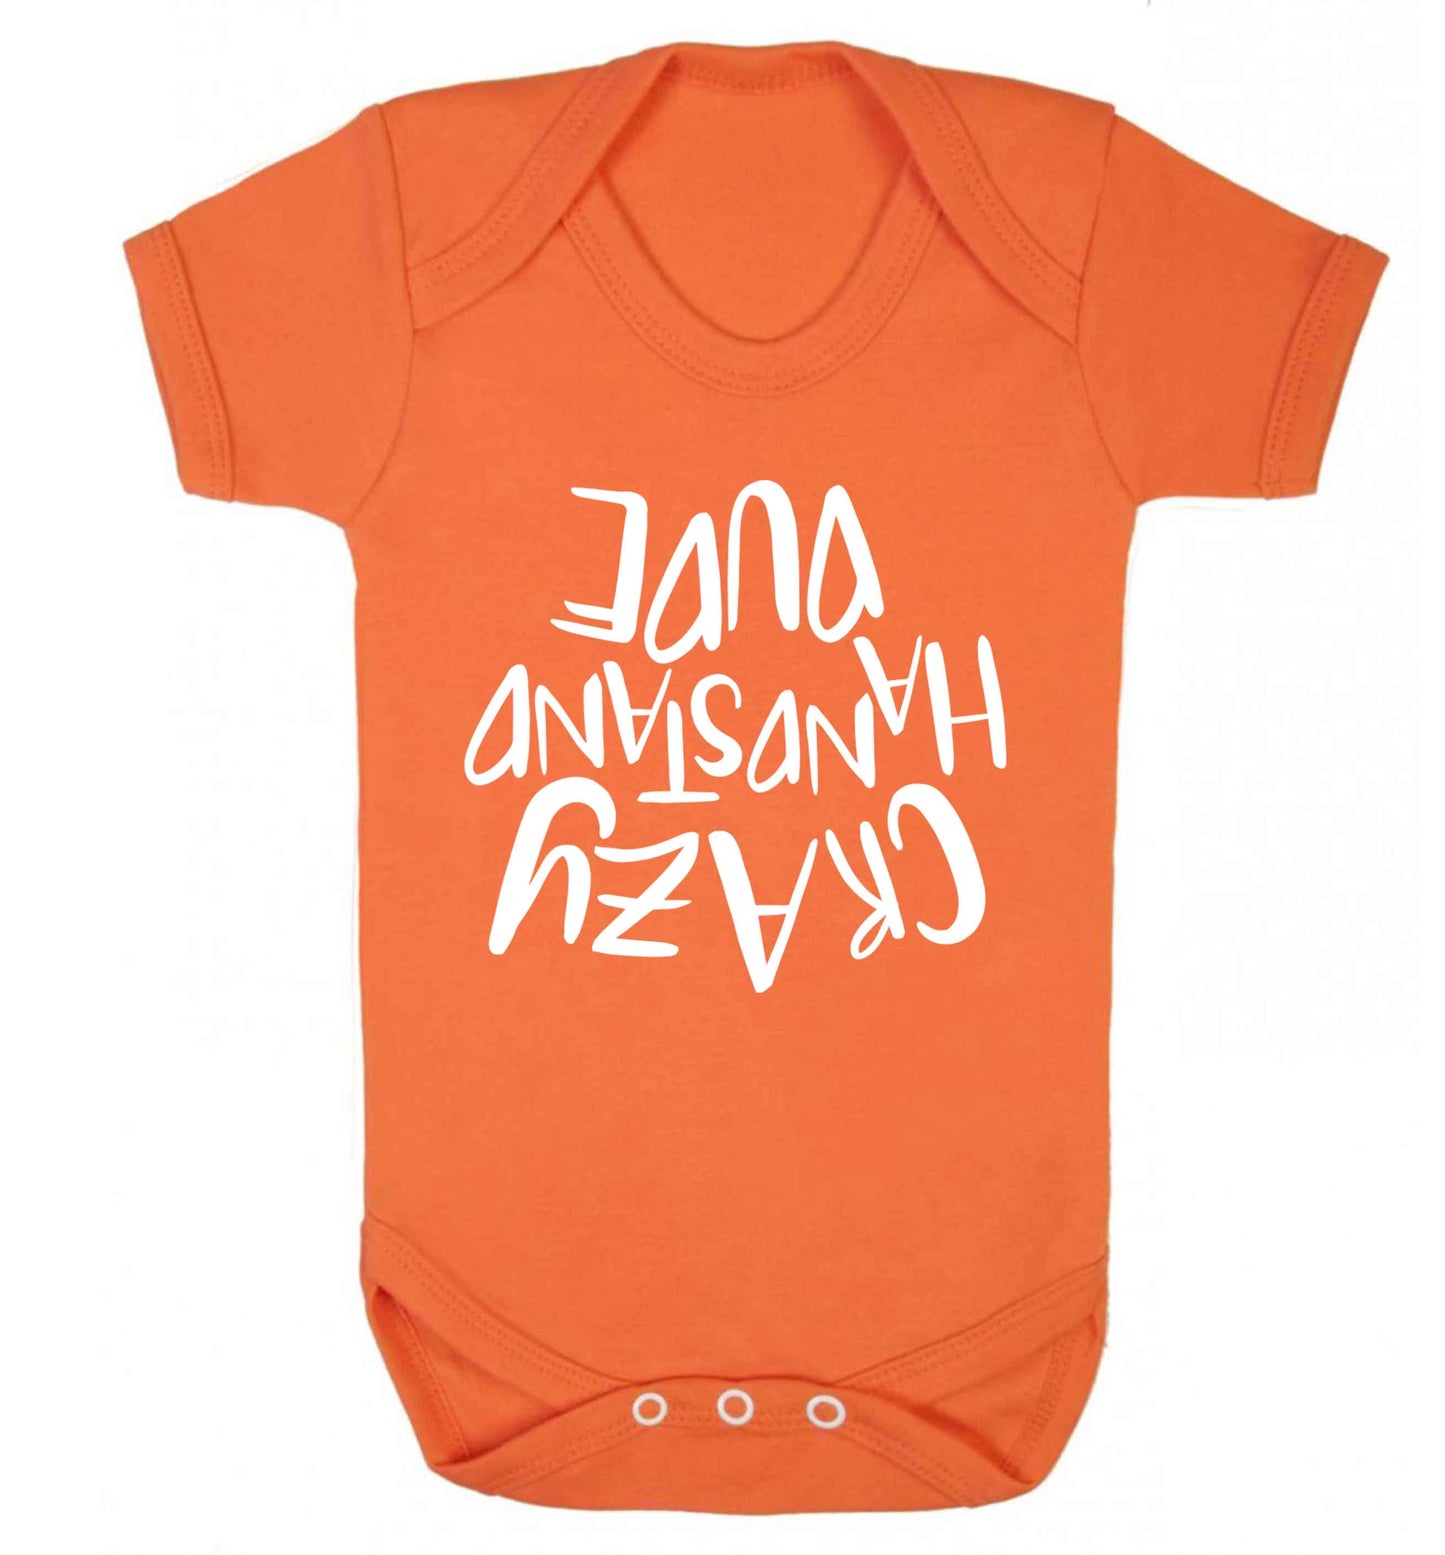 Crazy handstand dude Baby Vest orange 18-24 months